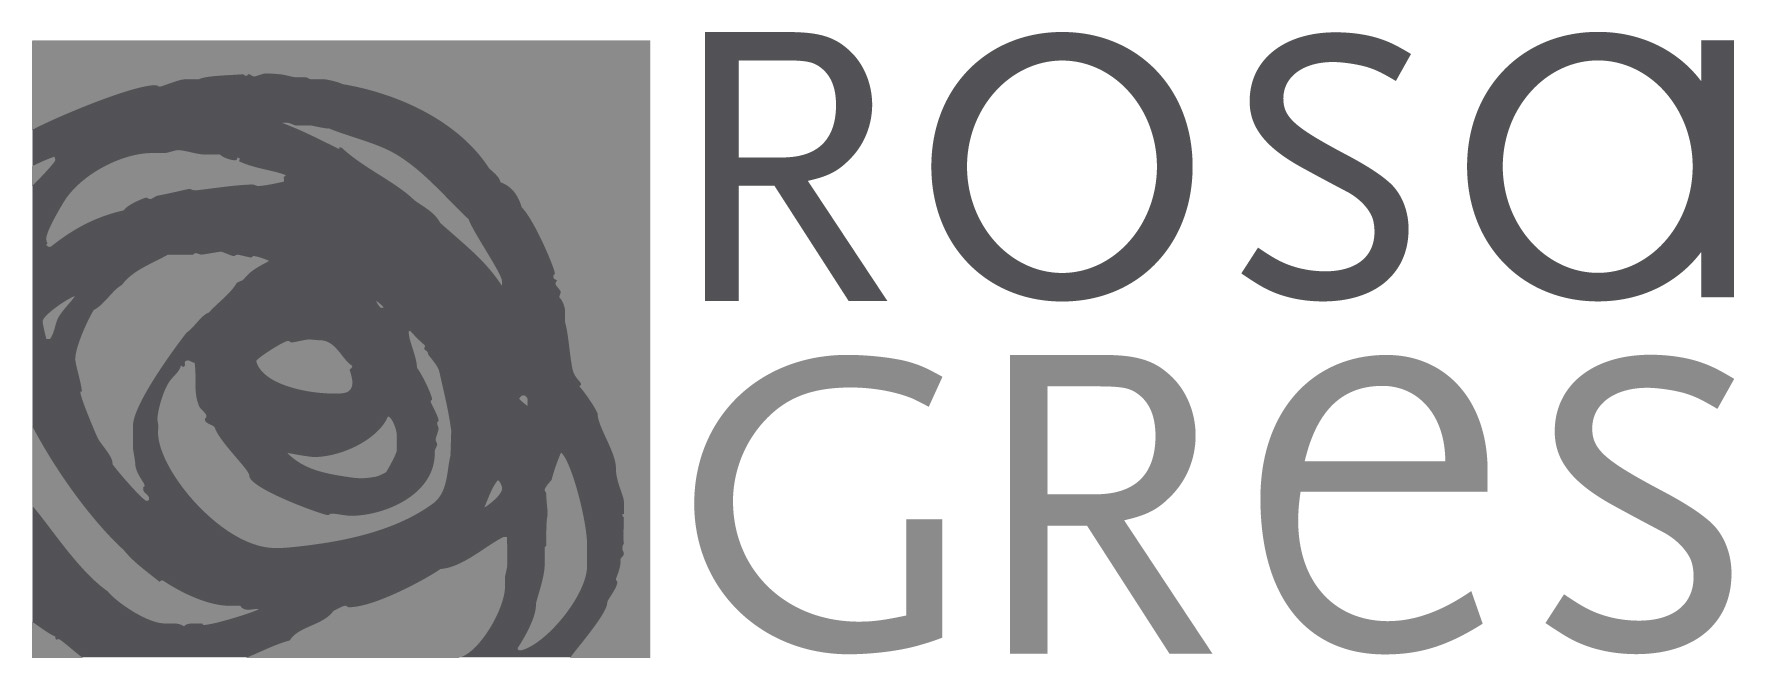 logo_rosagres